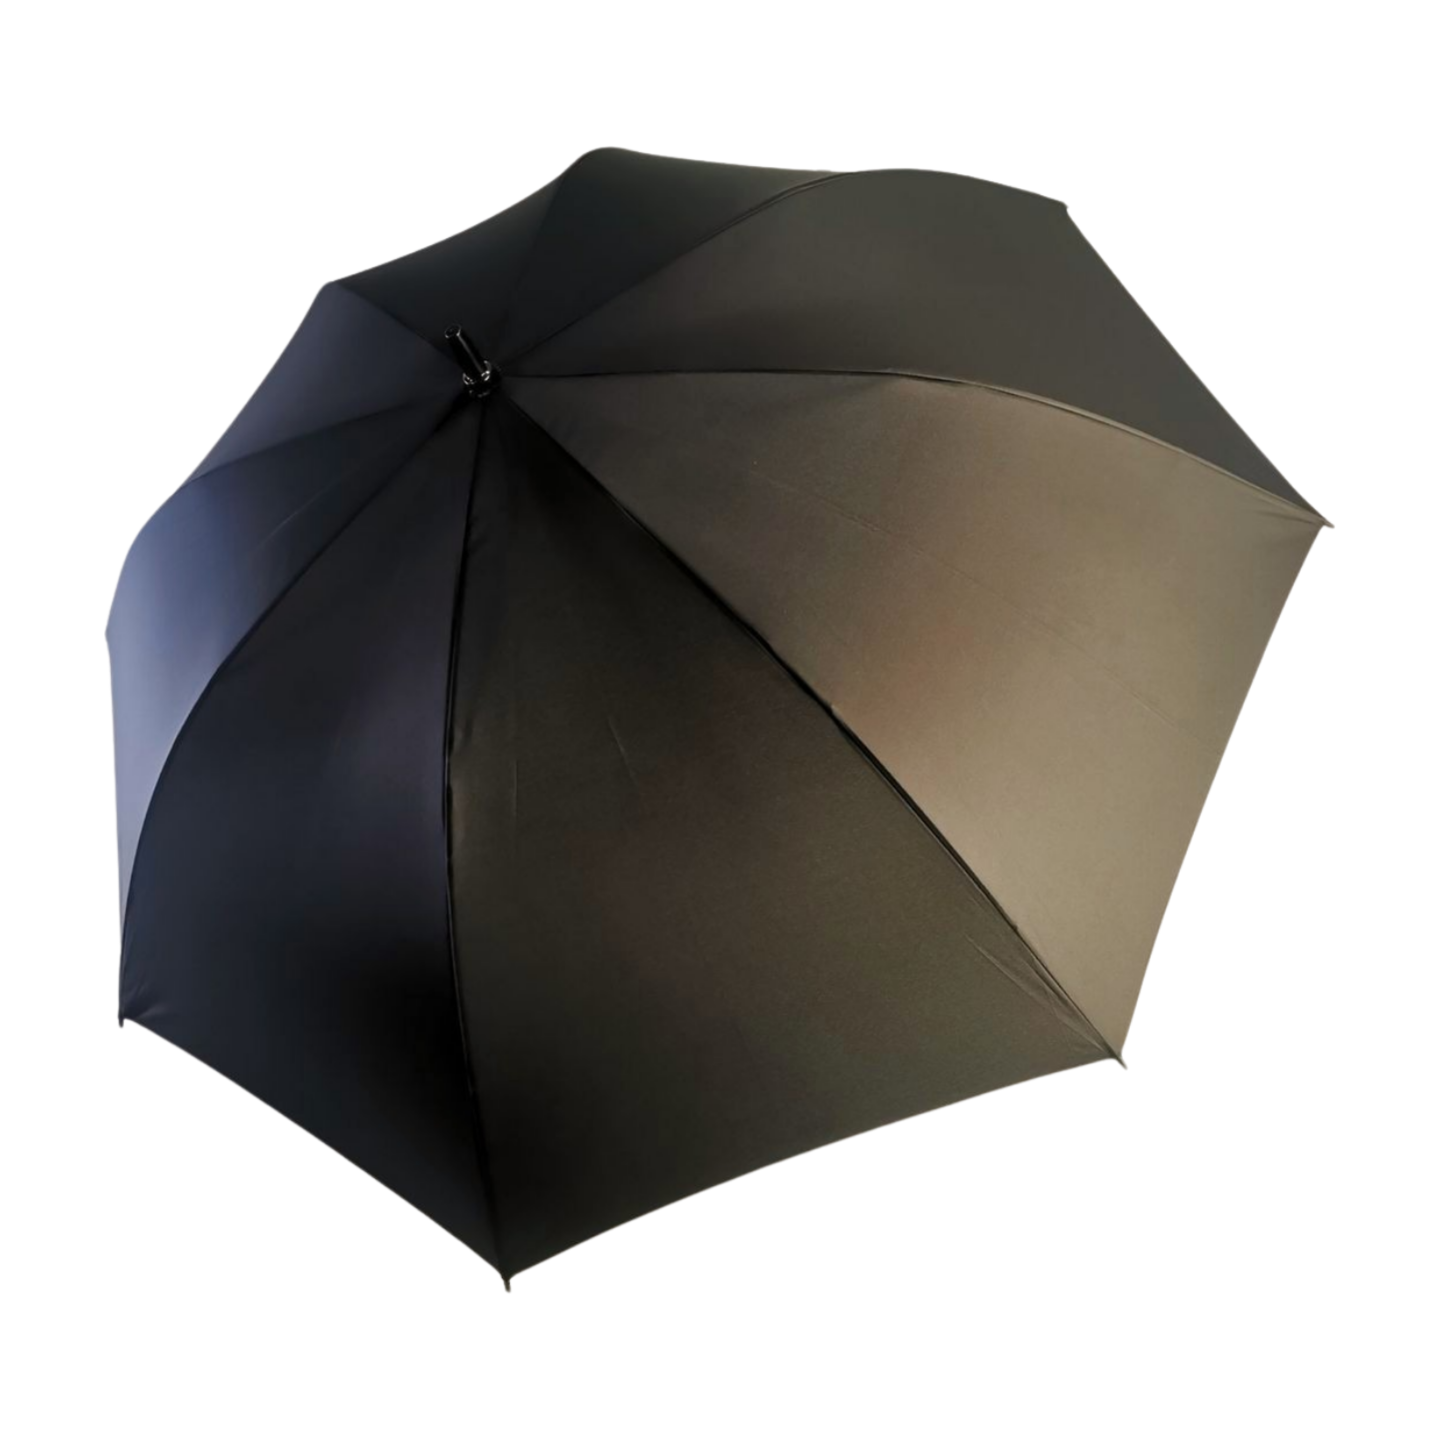 https://www.hodaumbrella.com/60-golf-umbrel…business-style-product/